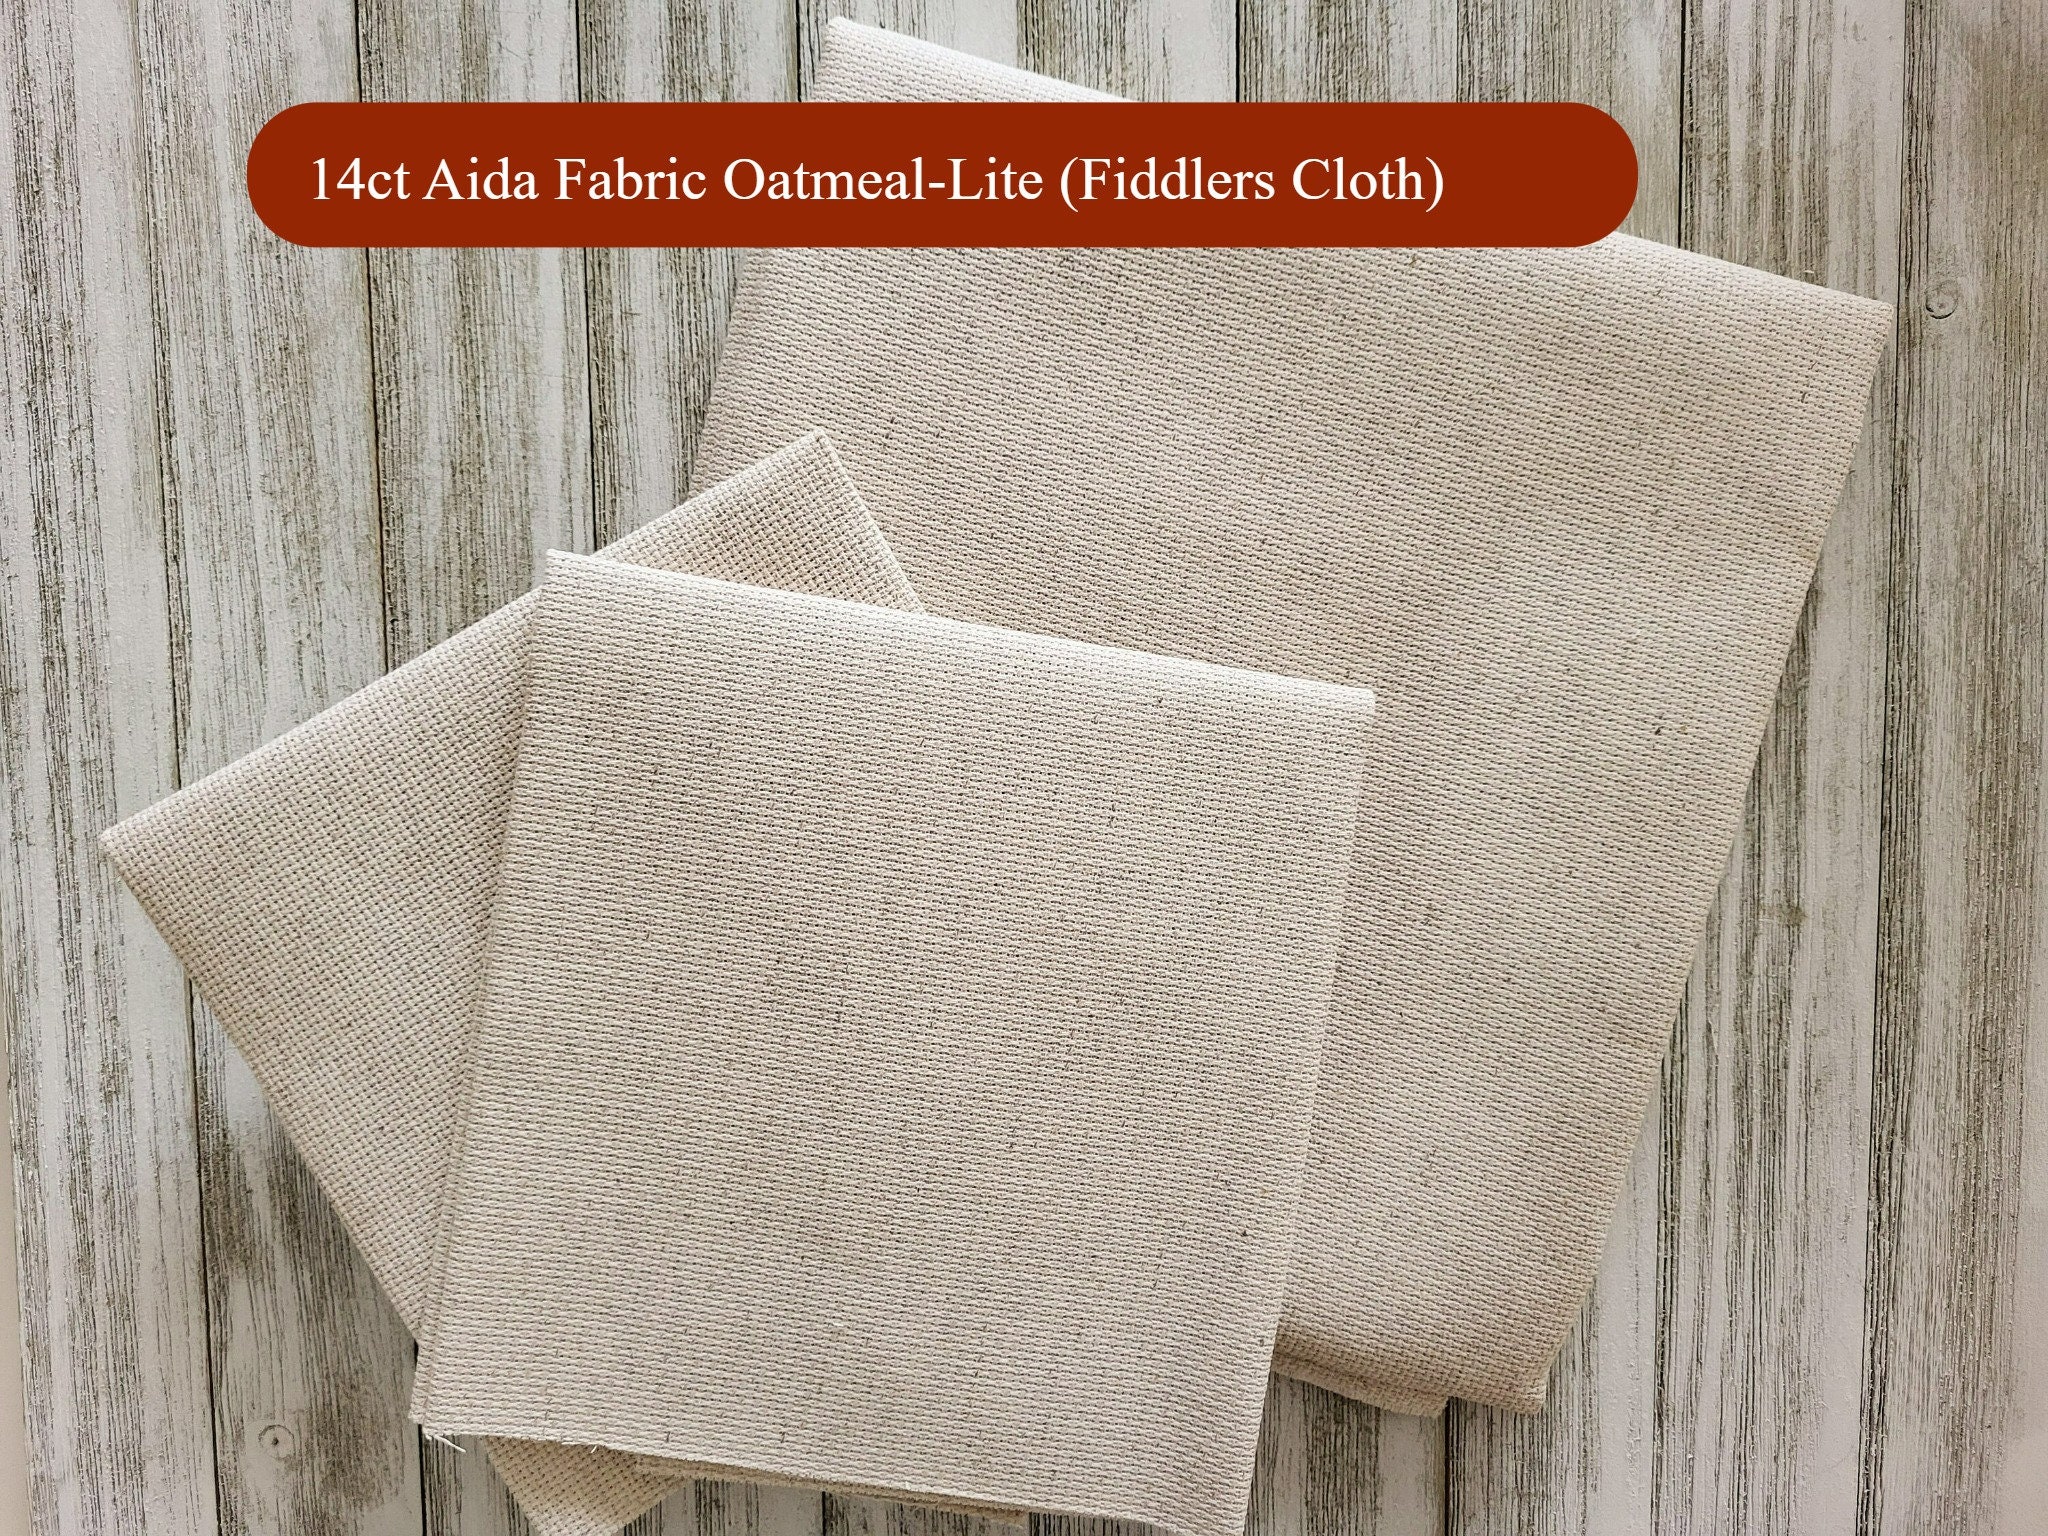 18 Count Fiddler's Cloth Lite Oatmeal Aida Fabric Cross Stitch Fabric, 18ct  Natural Aida Cloth, Zweigart Aida Canvas 